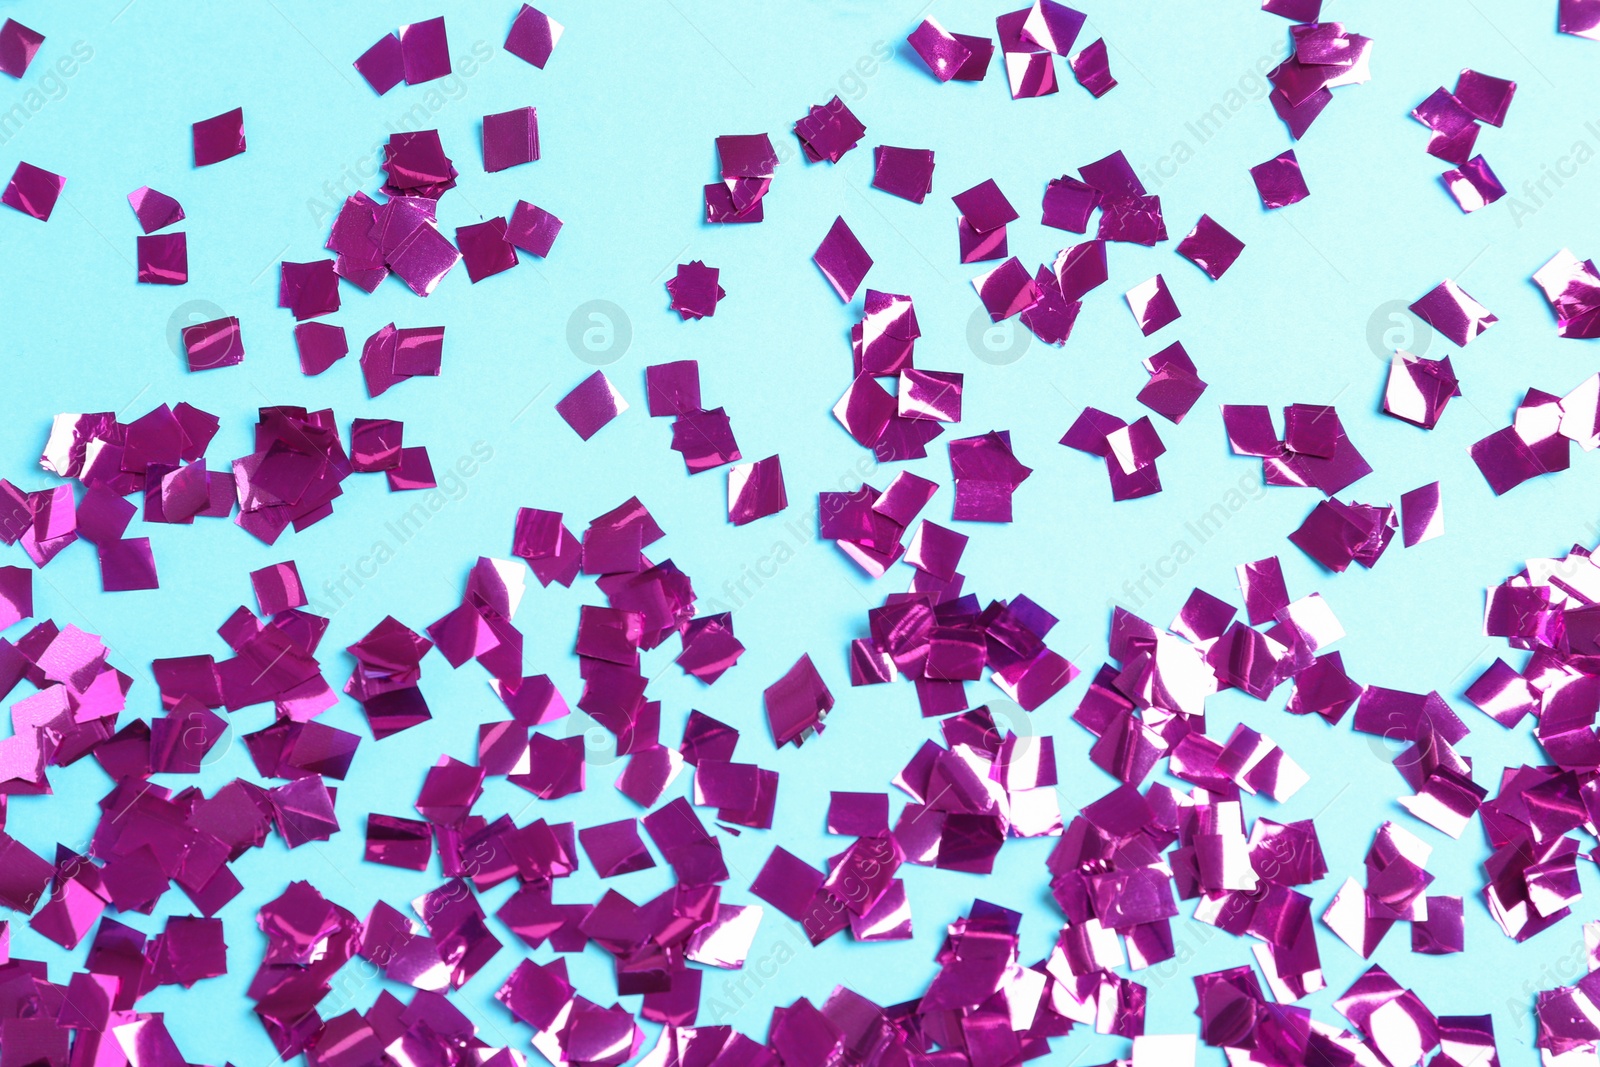 Photo of Shiny purple confetti on light blue background, flat lay